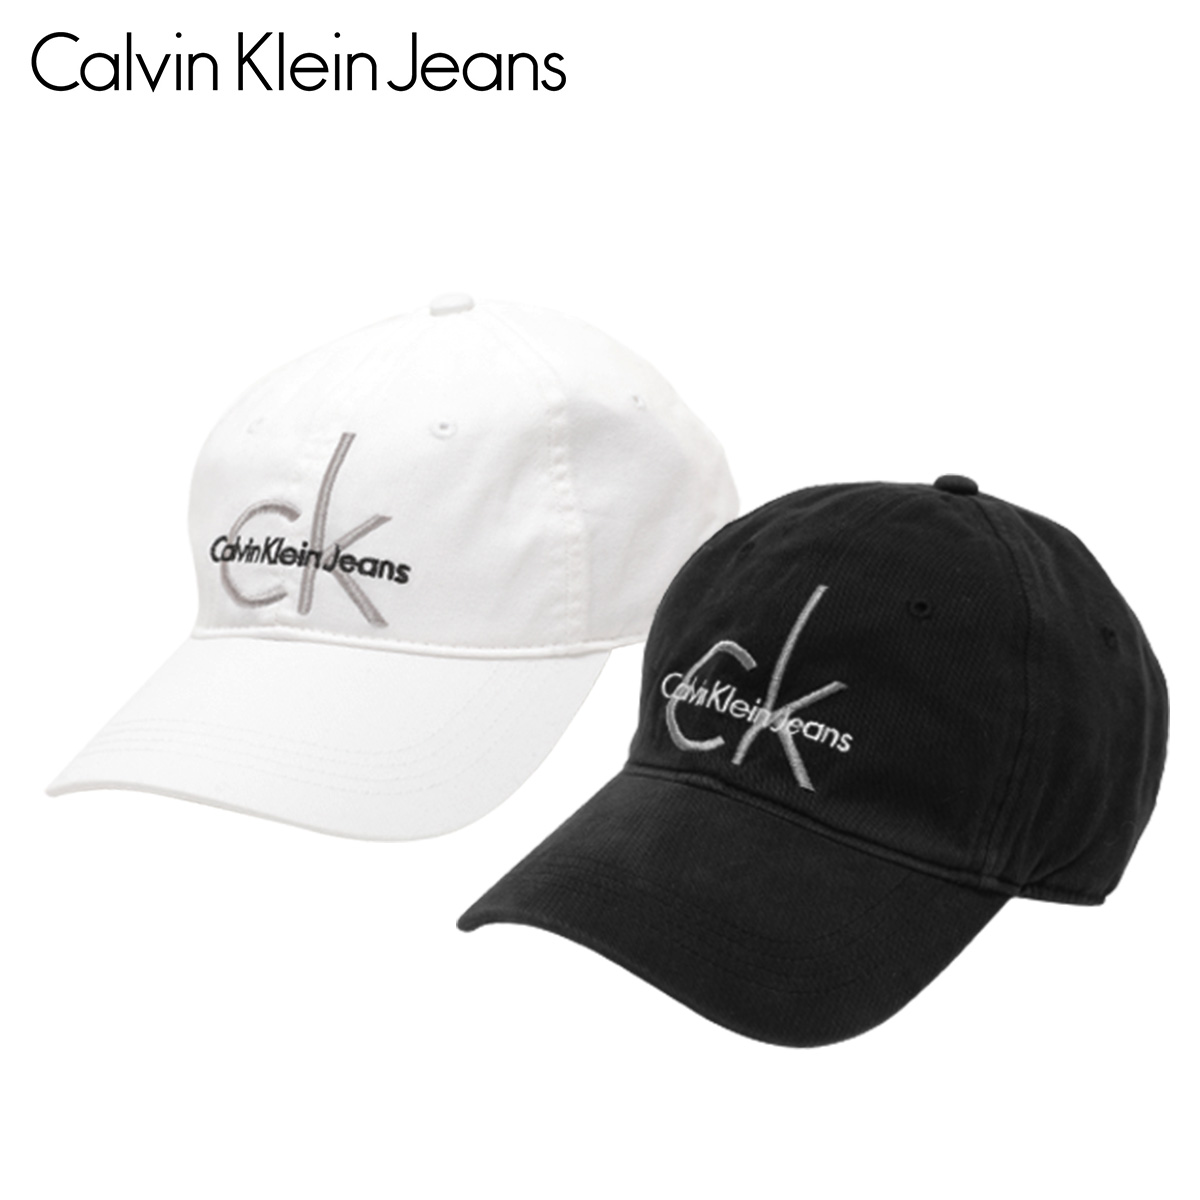 calvin klein jeans baseball cap